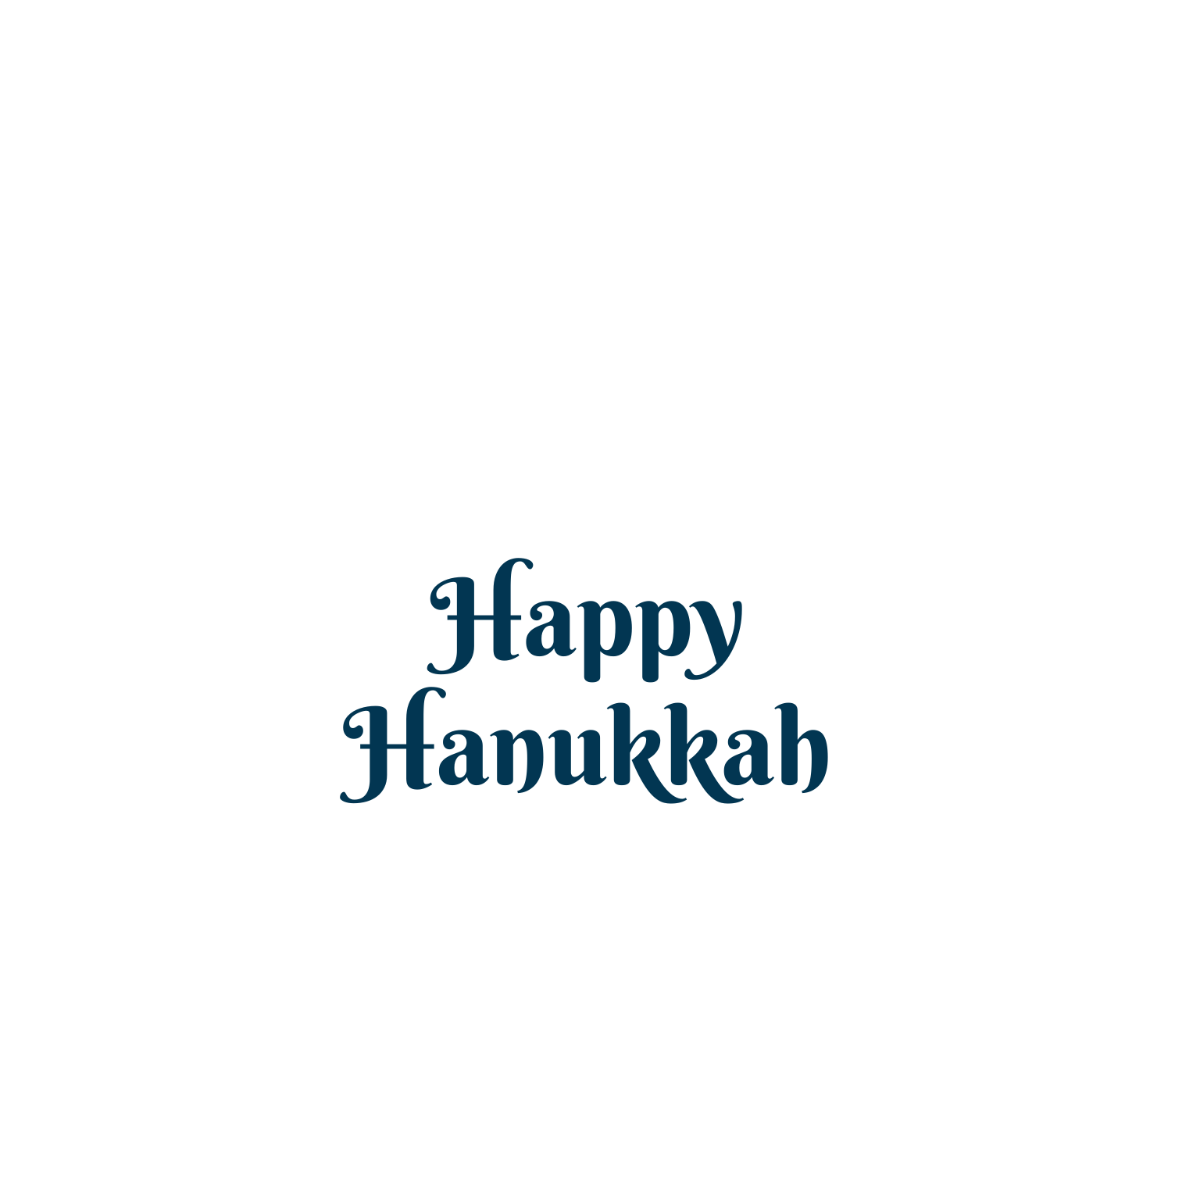 Free Happy Hanukkah Vector Template